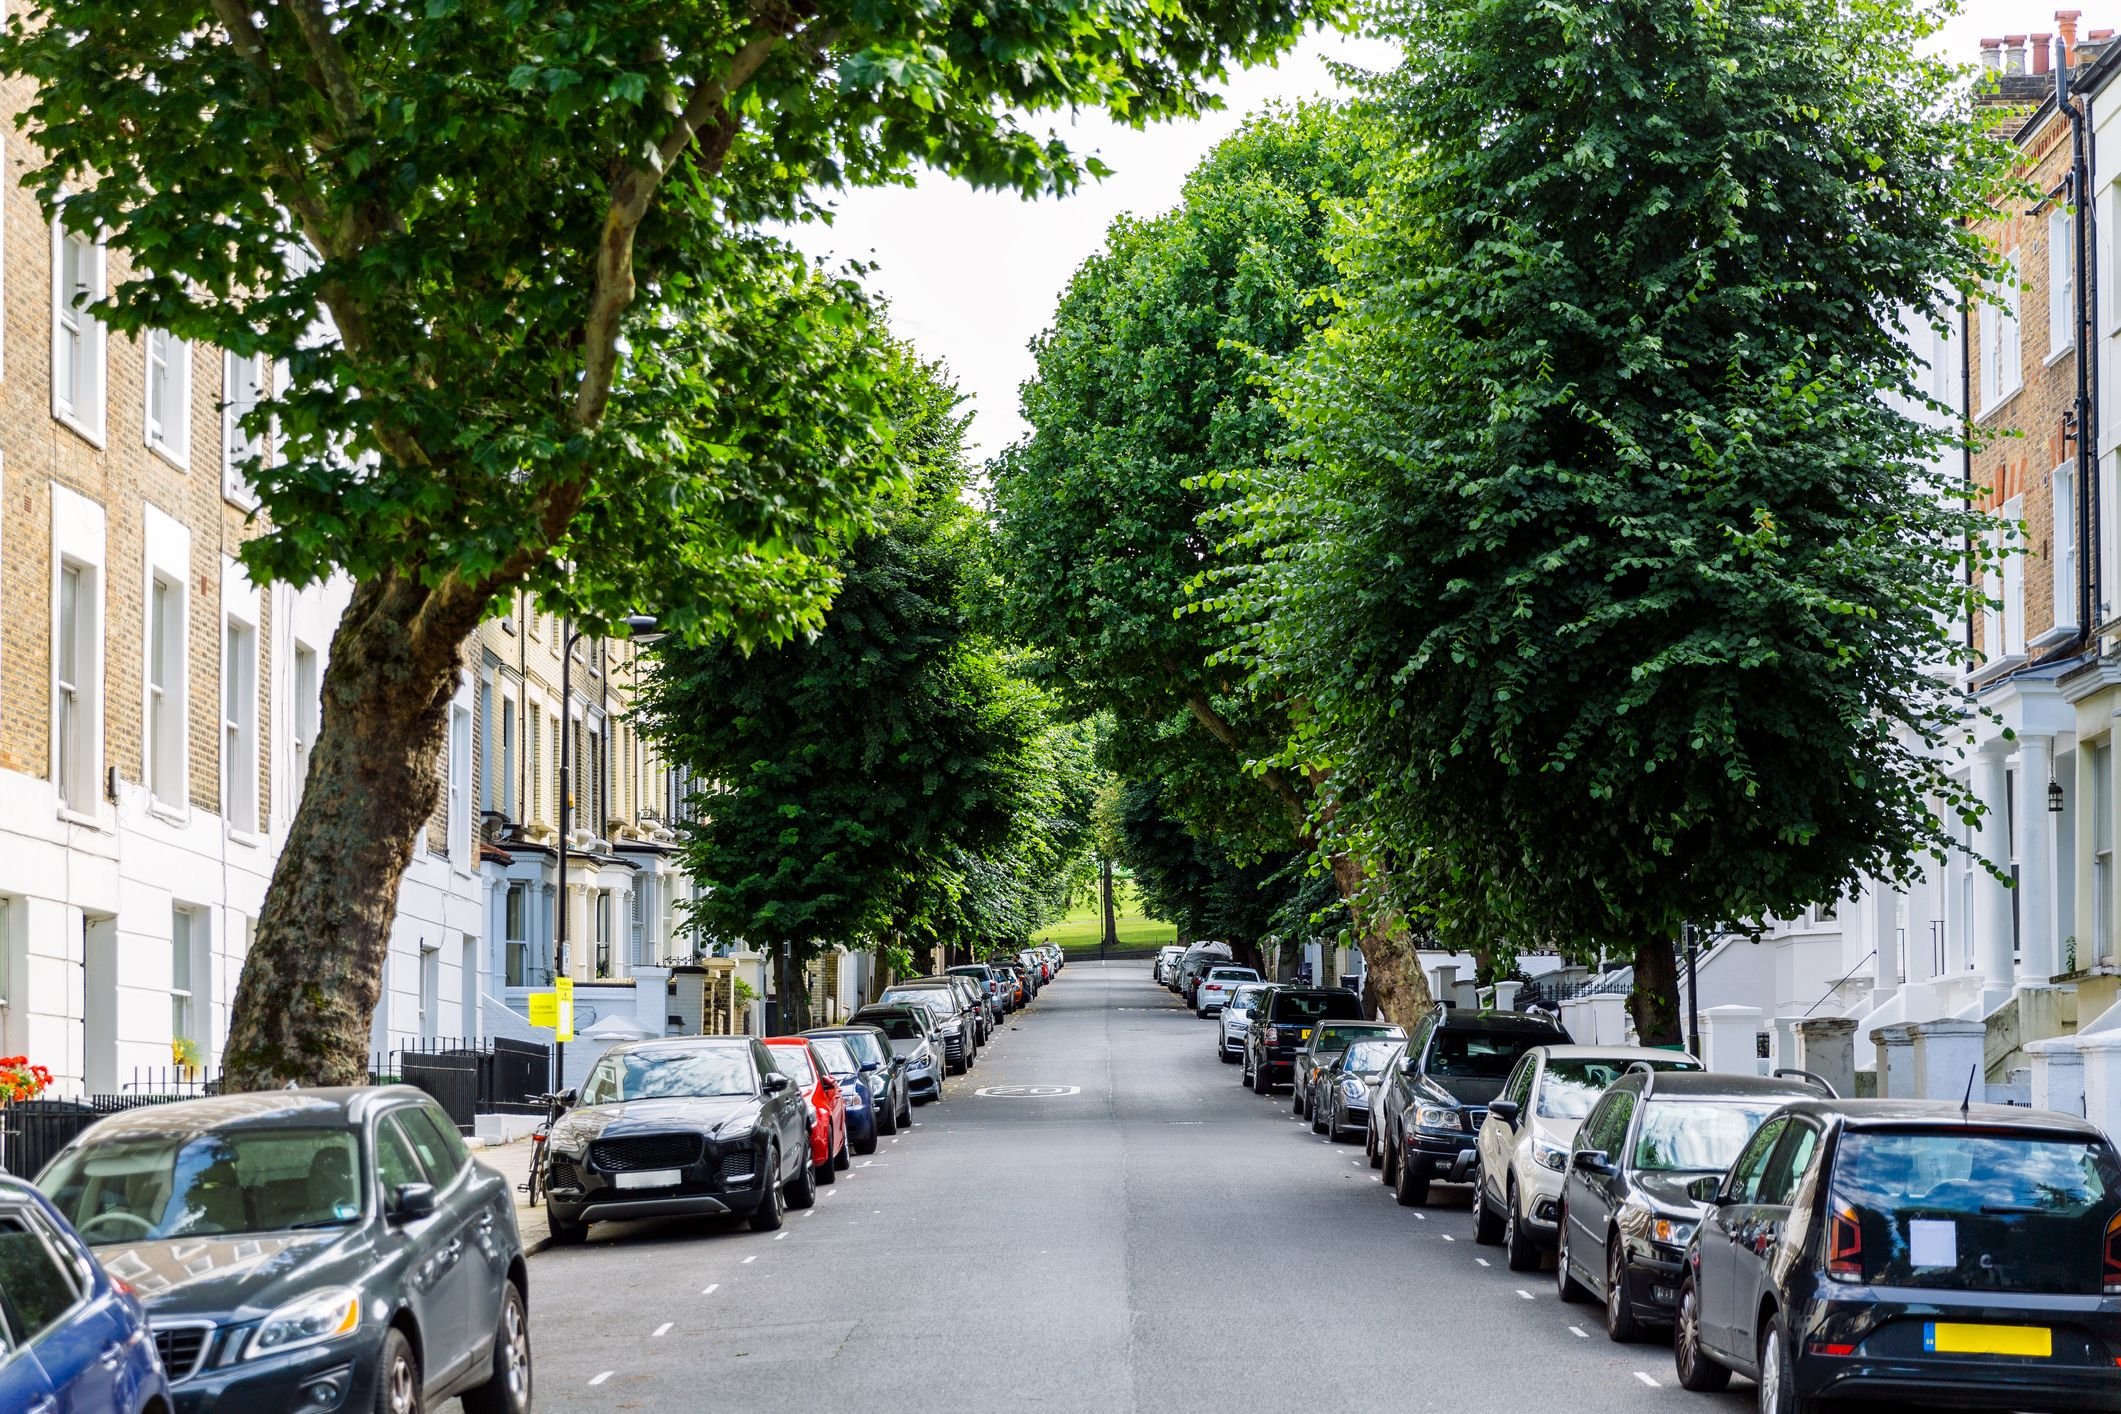 A street full of cars. | Source: Shutterstock